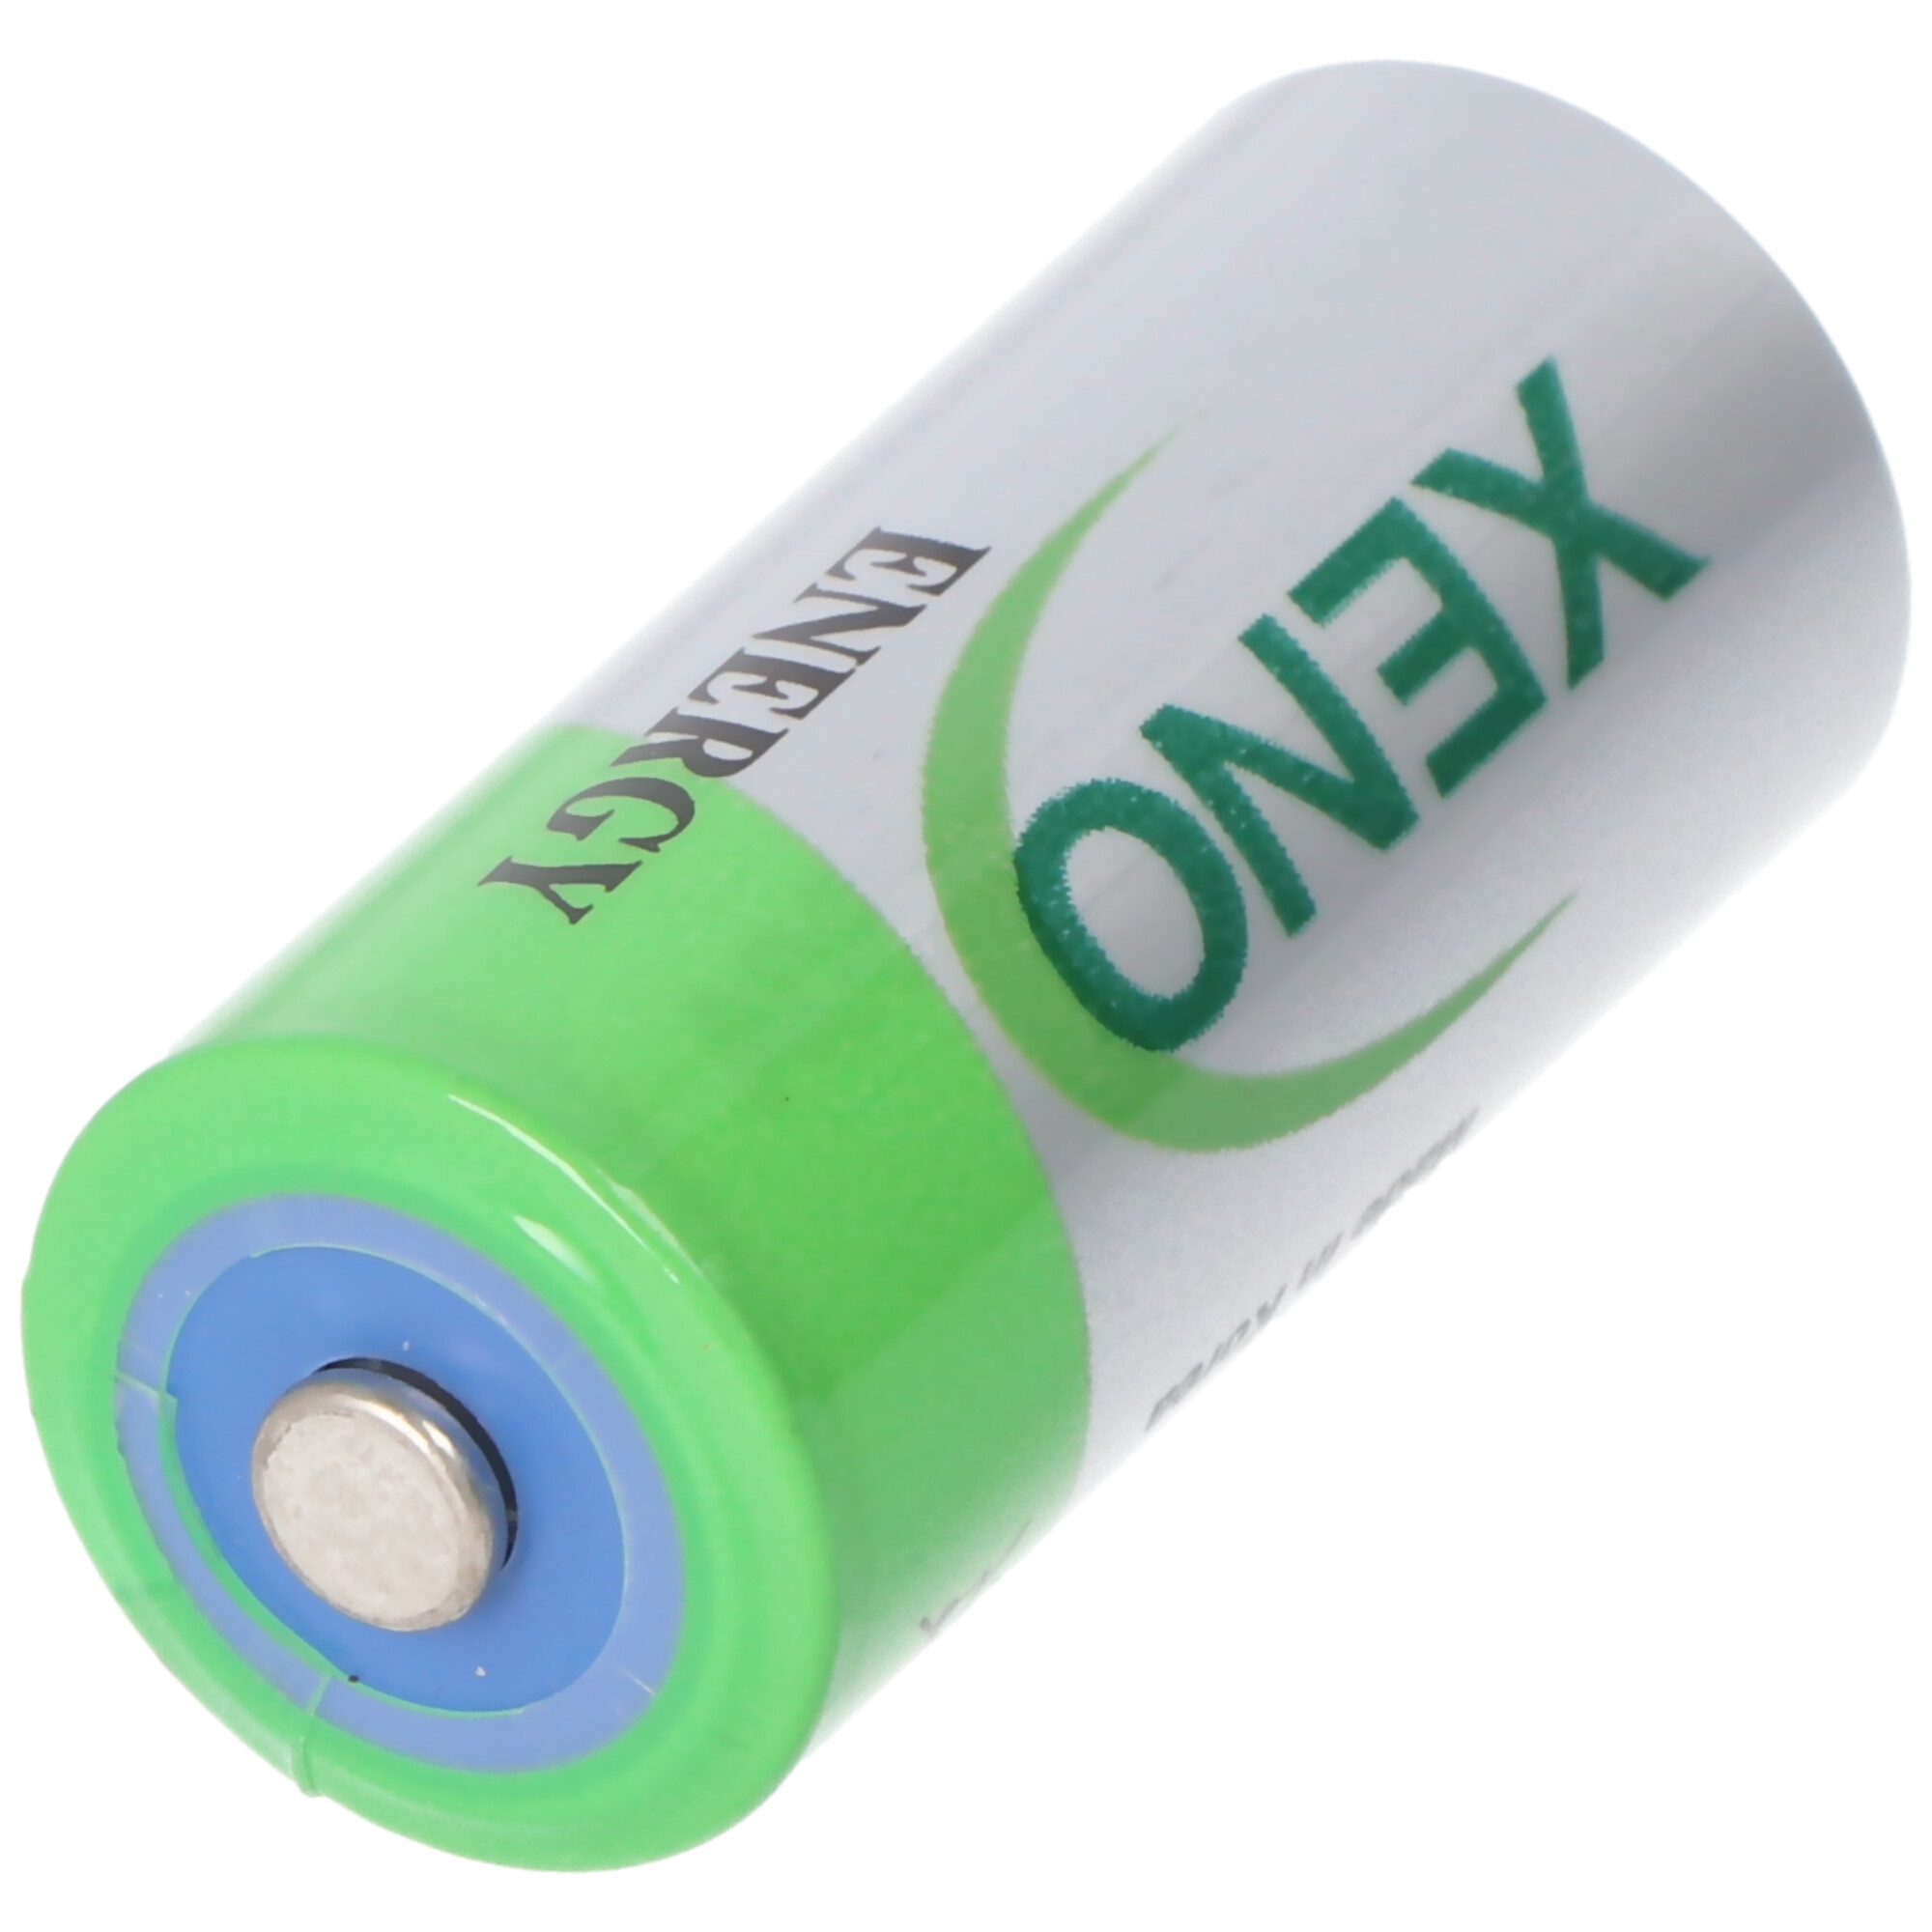 Lithium-Thionylchlorid-Batterie Xeno XL-055 F, 2/3AA 1650mA